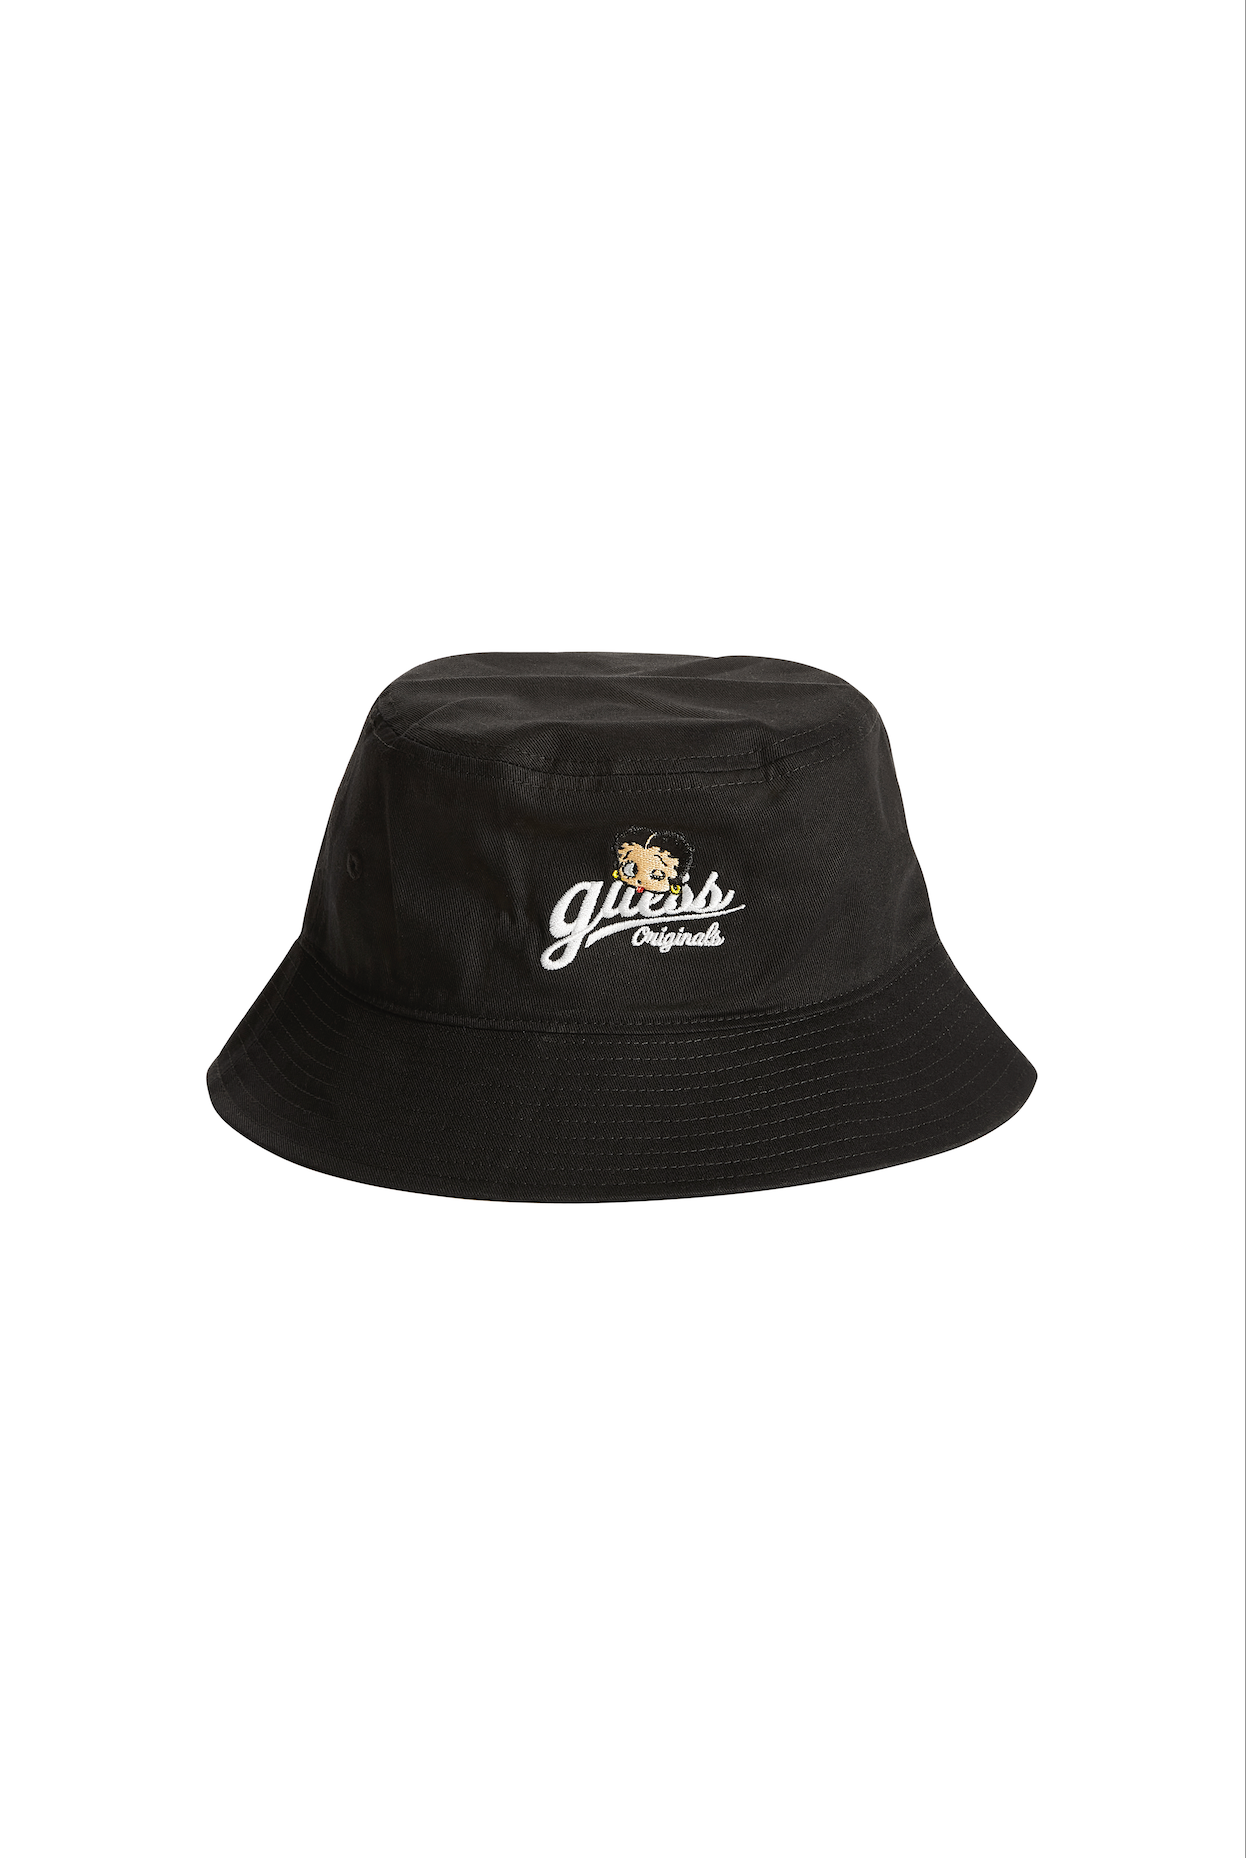 A bucket hat featuring a Betty Boop logo